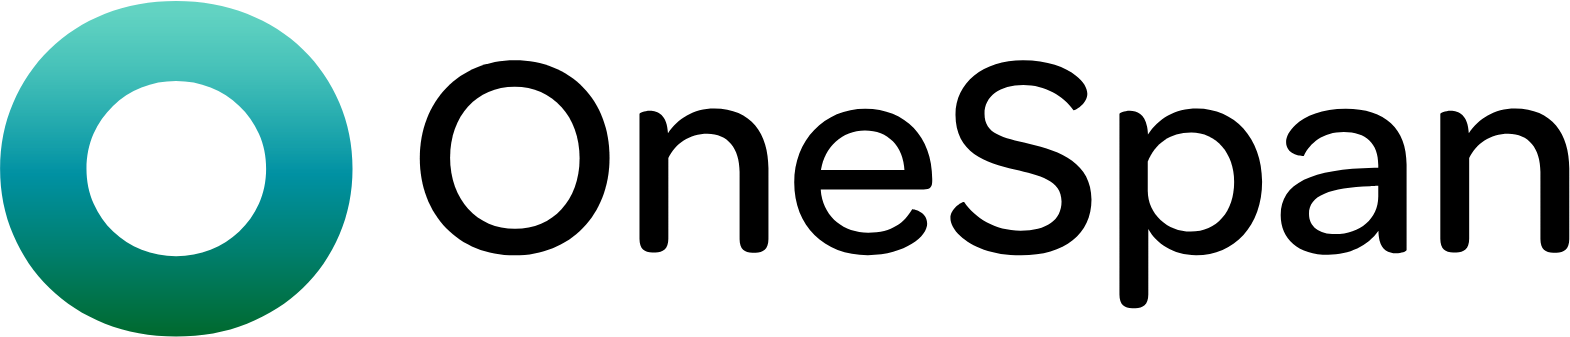 OneSpan logo large (transparent PNG)